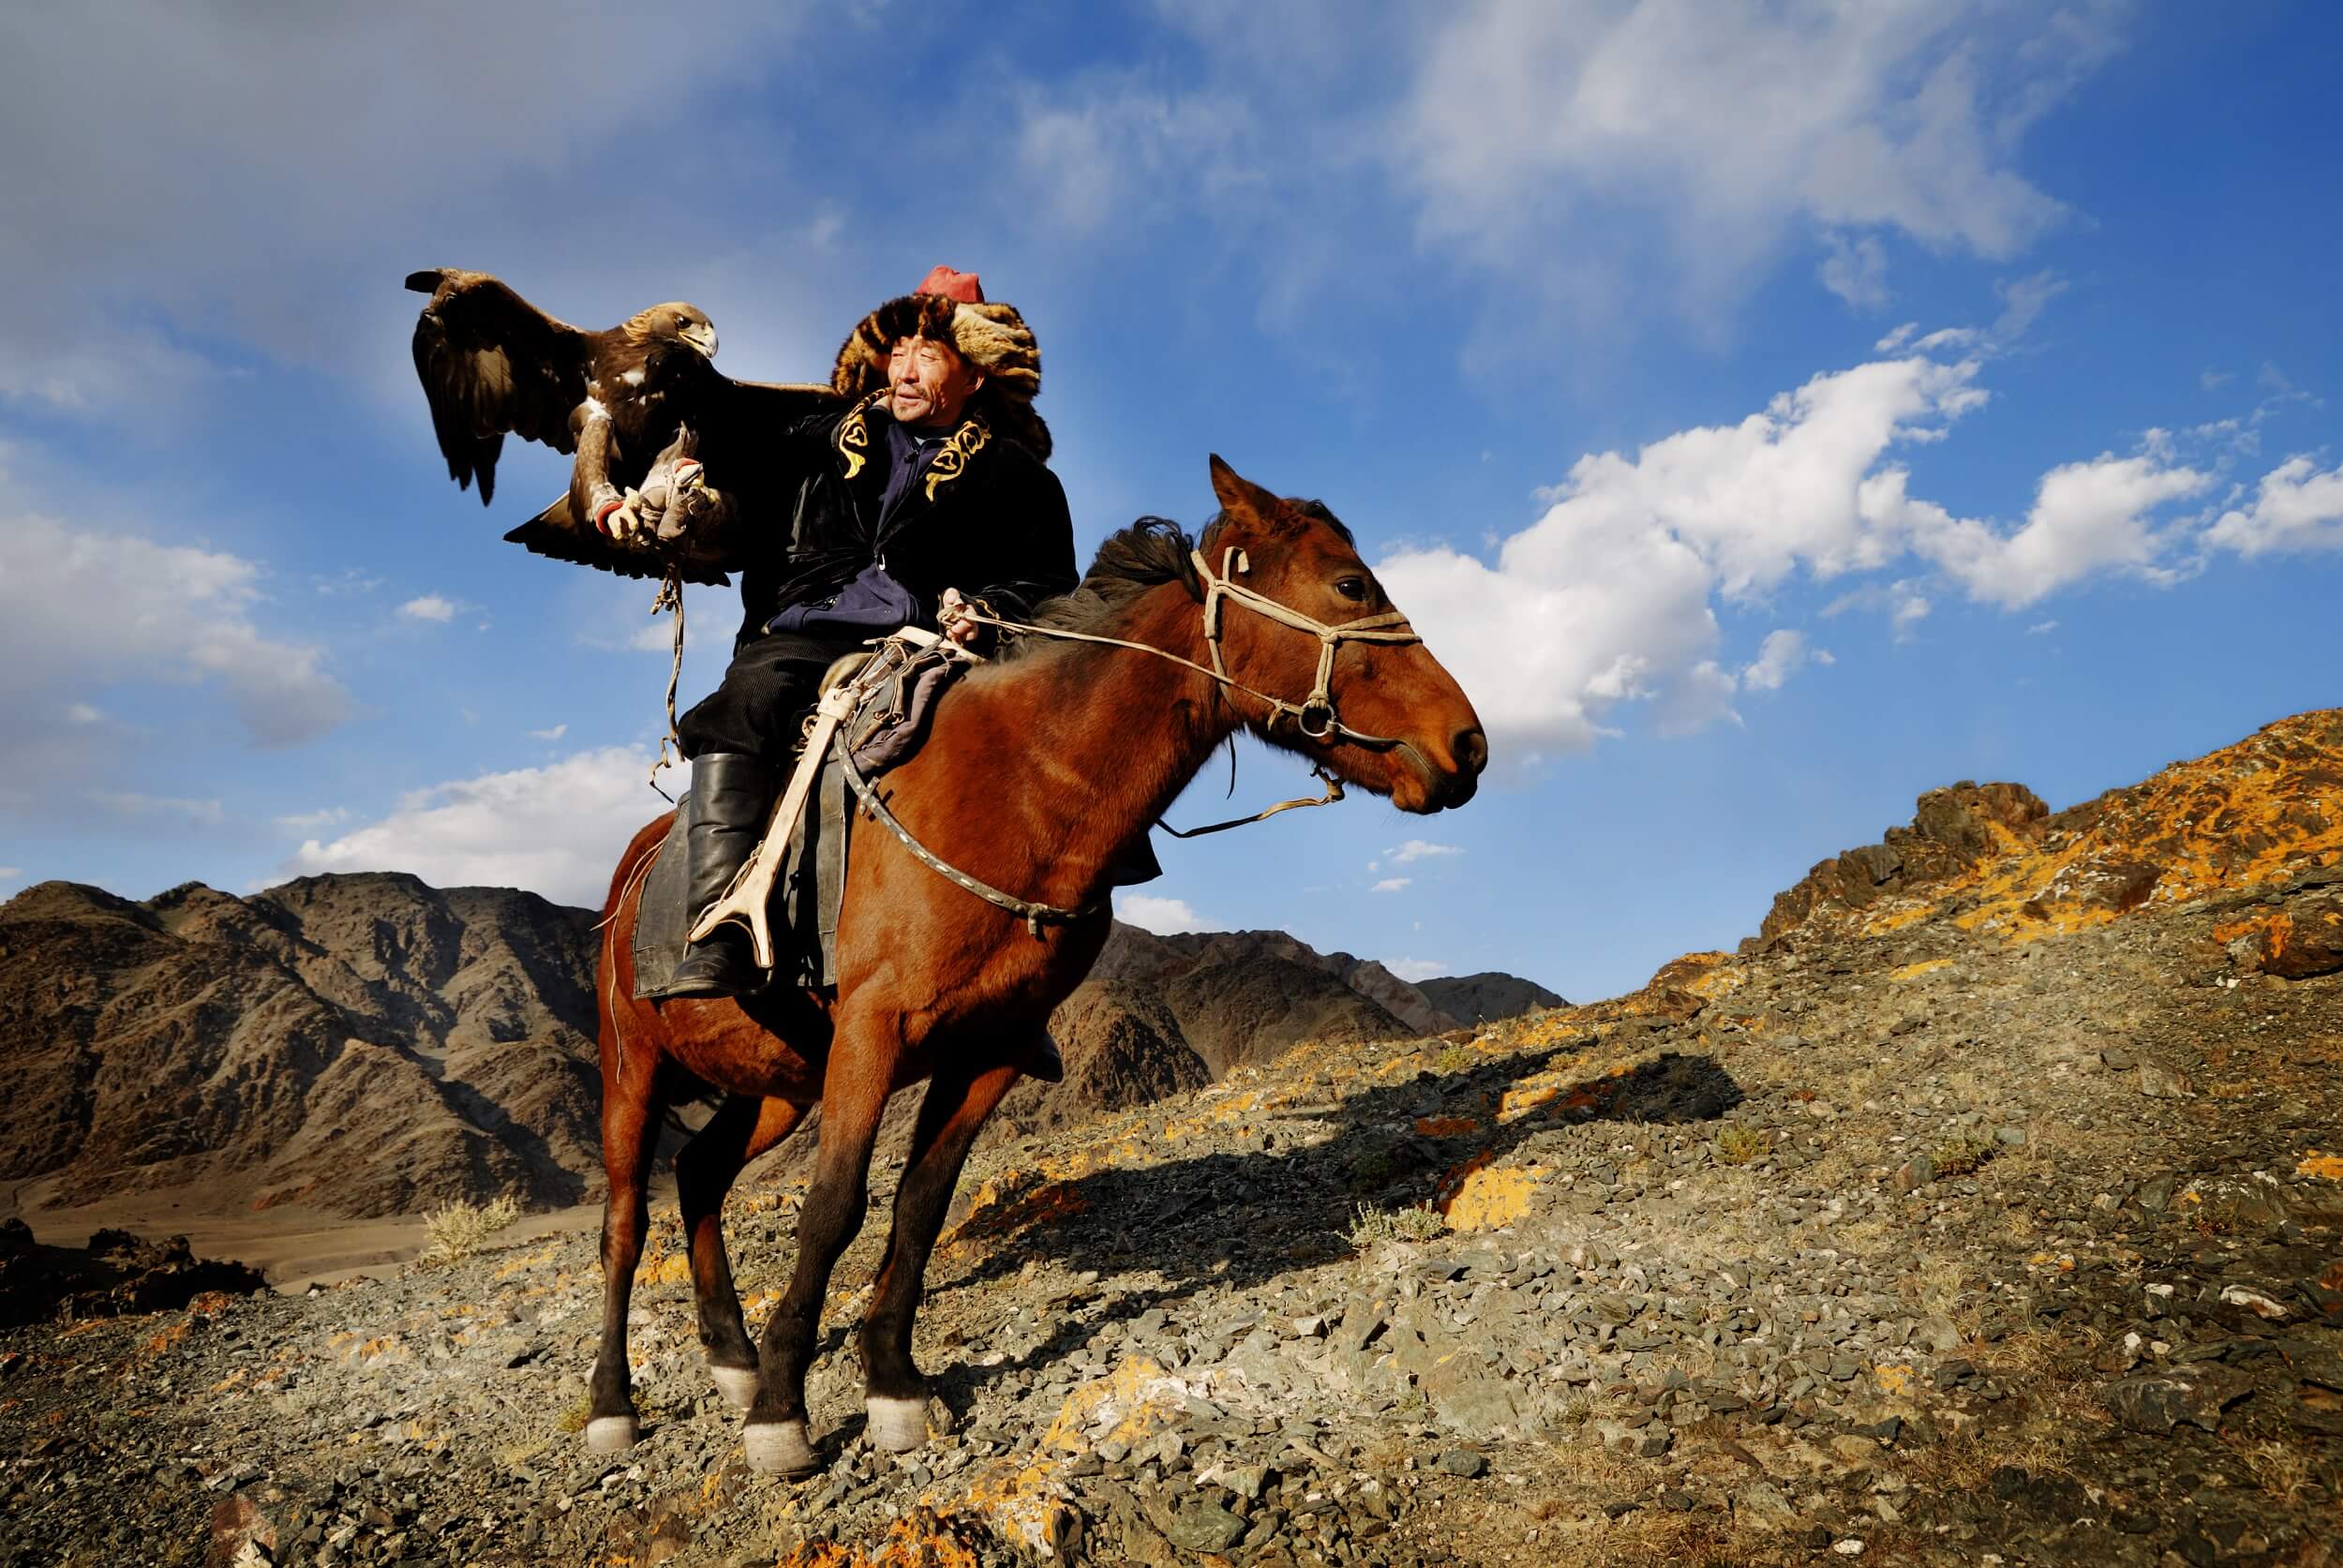 mongolian man with trained eagle 2021 08 26 23 57 37 utc 1